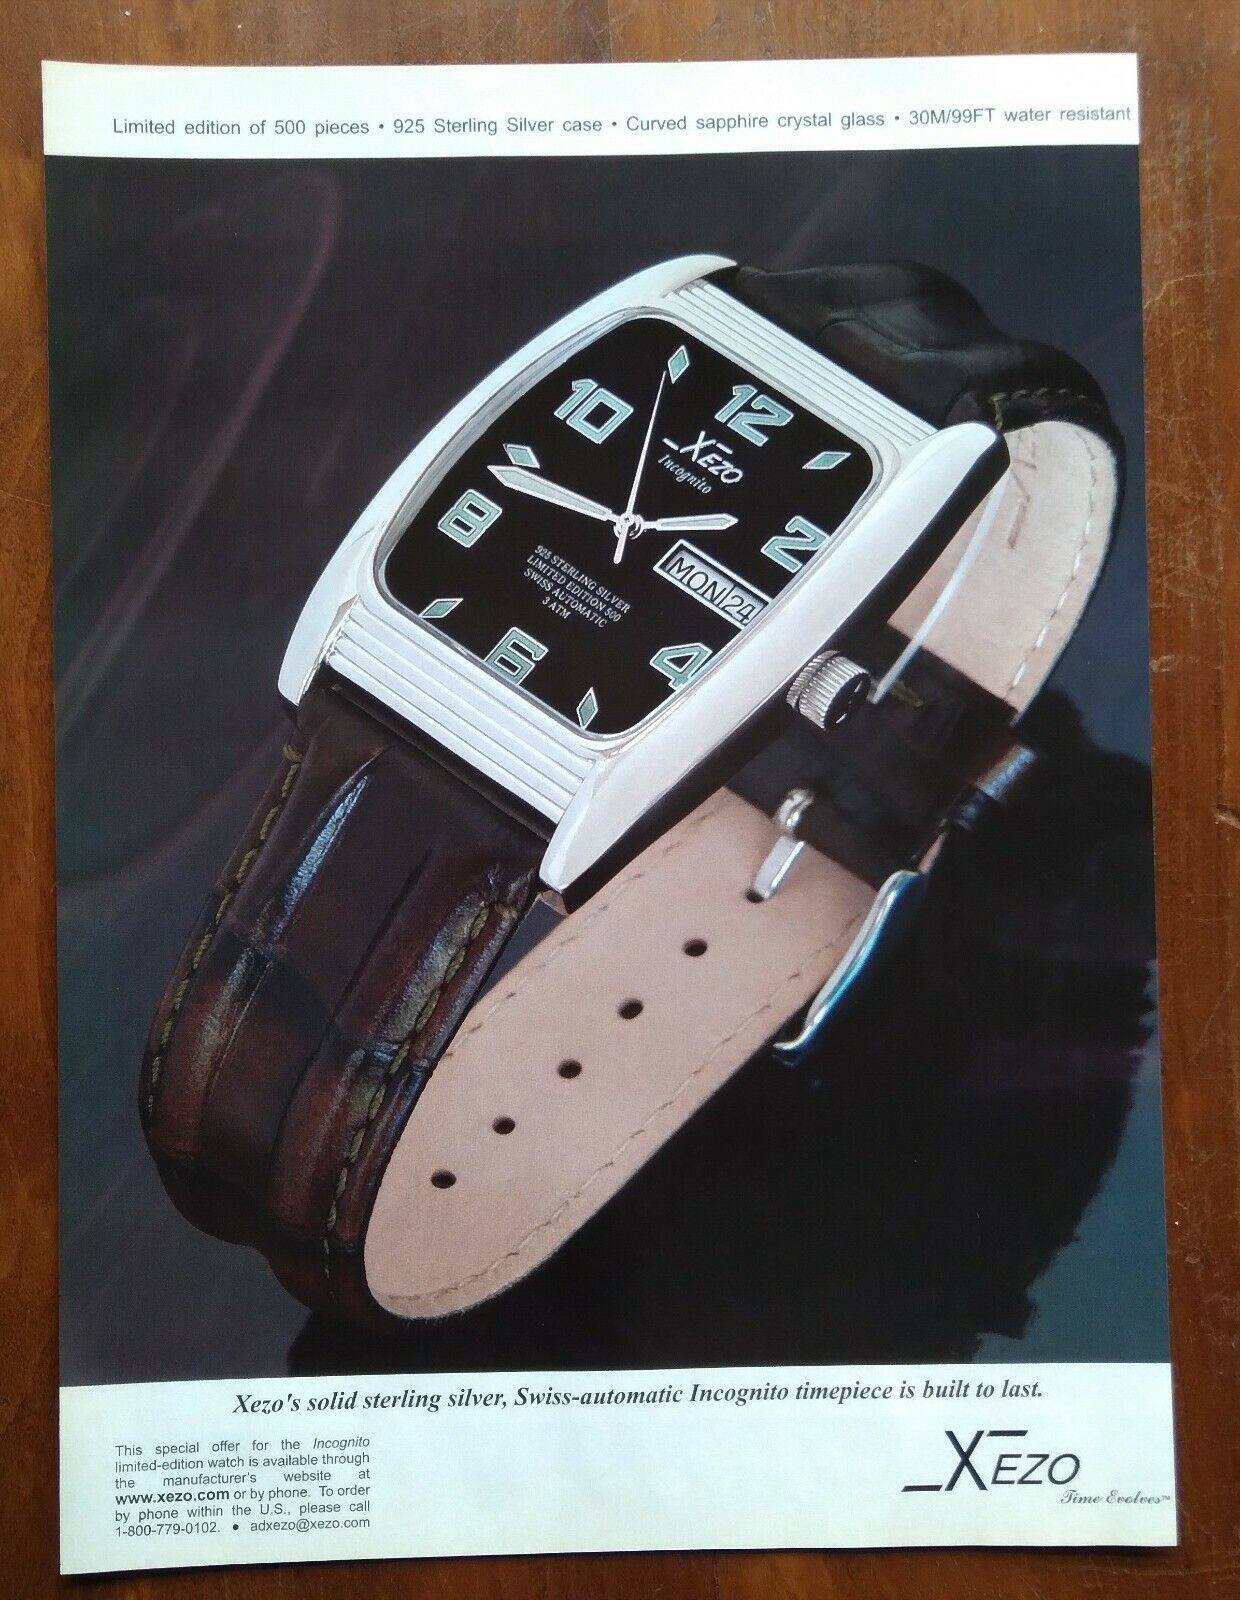 2007 Xezo Incognito Limited Edition Watch Art Photo Vintage Magazine Print Ad 